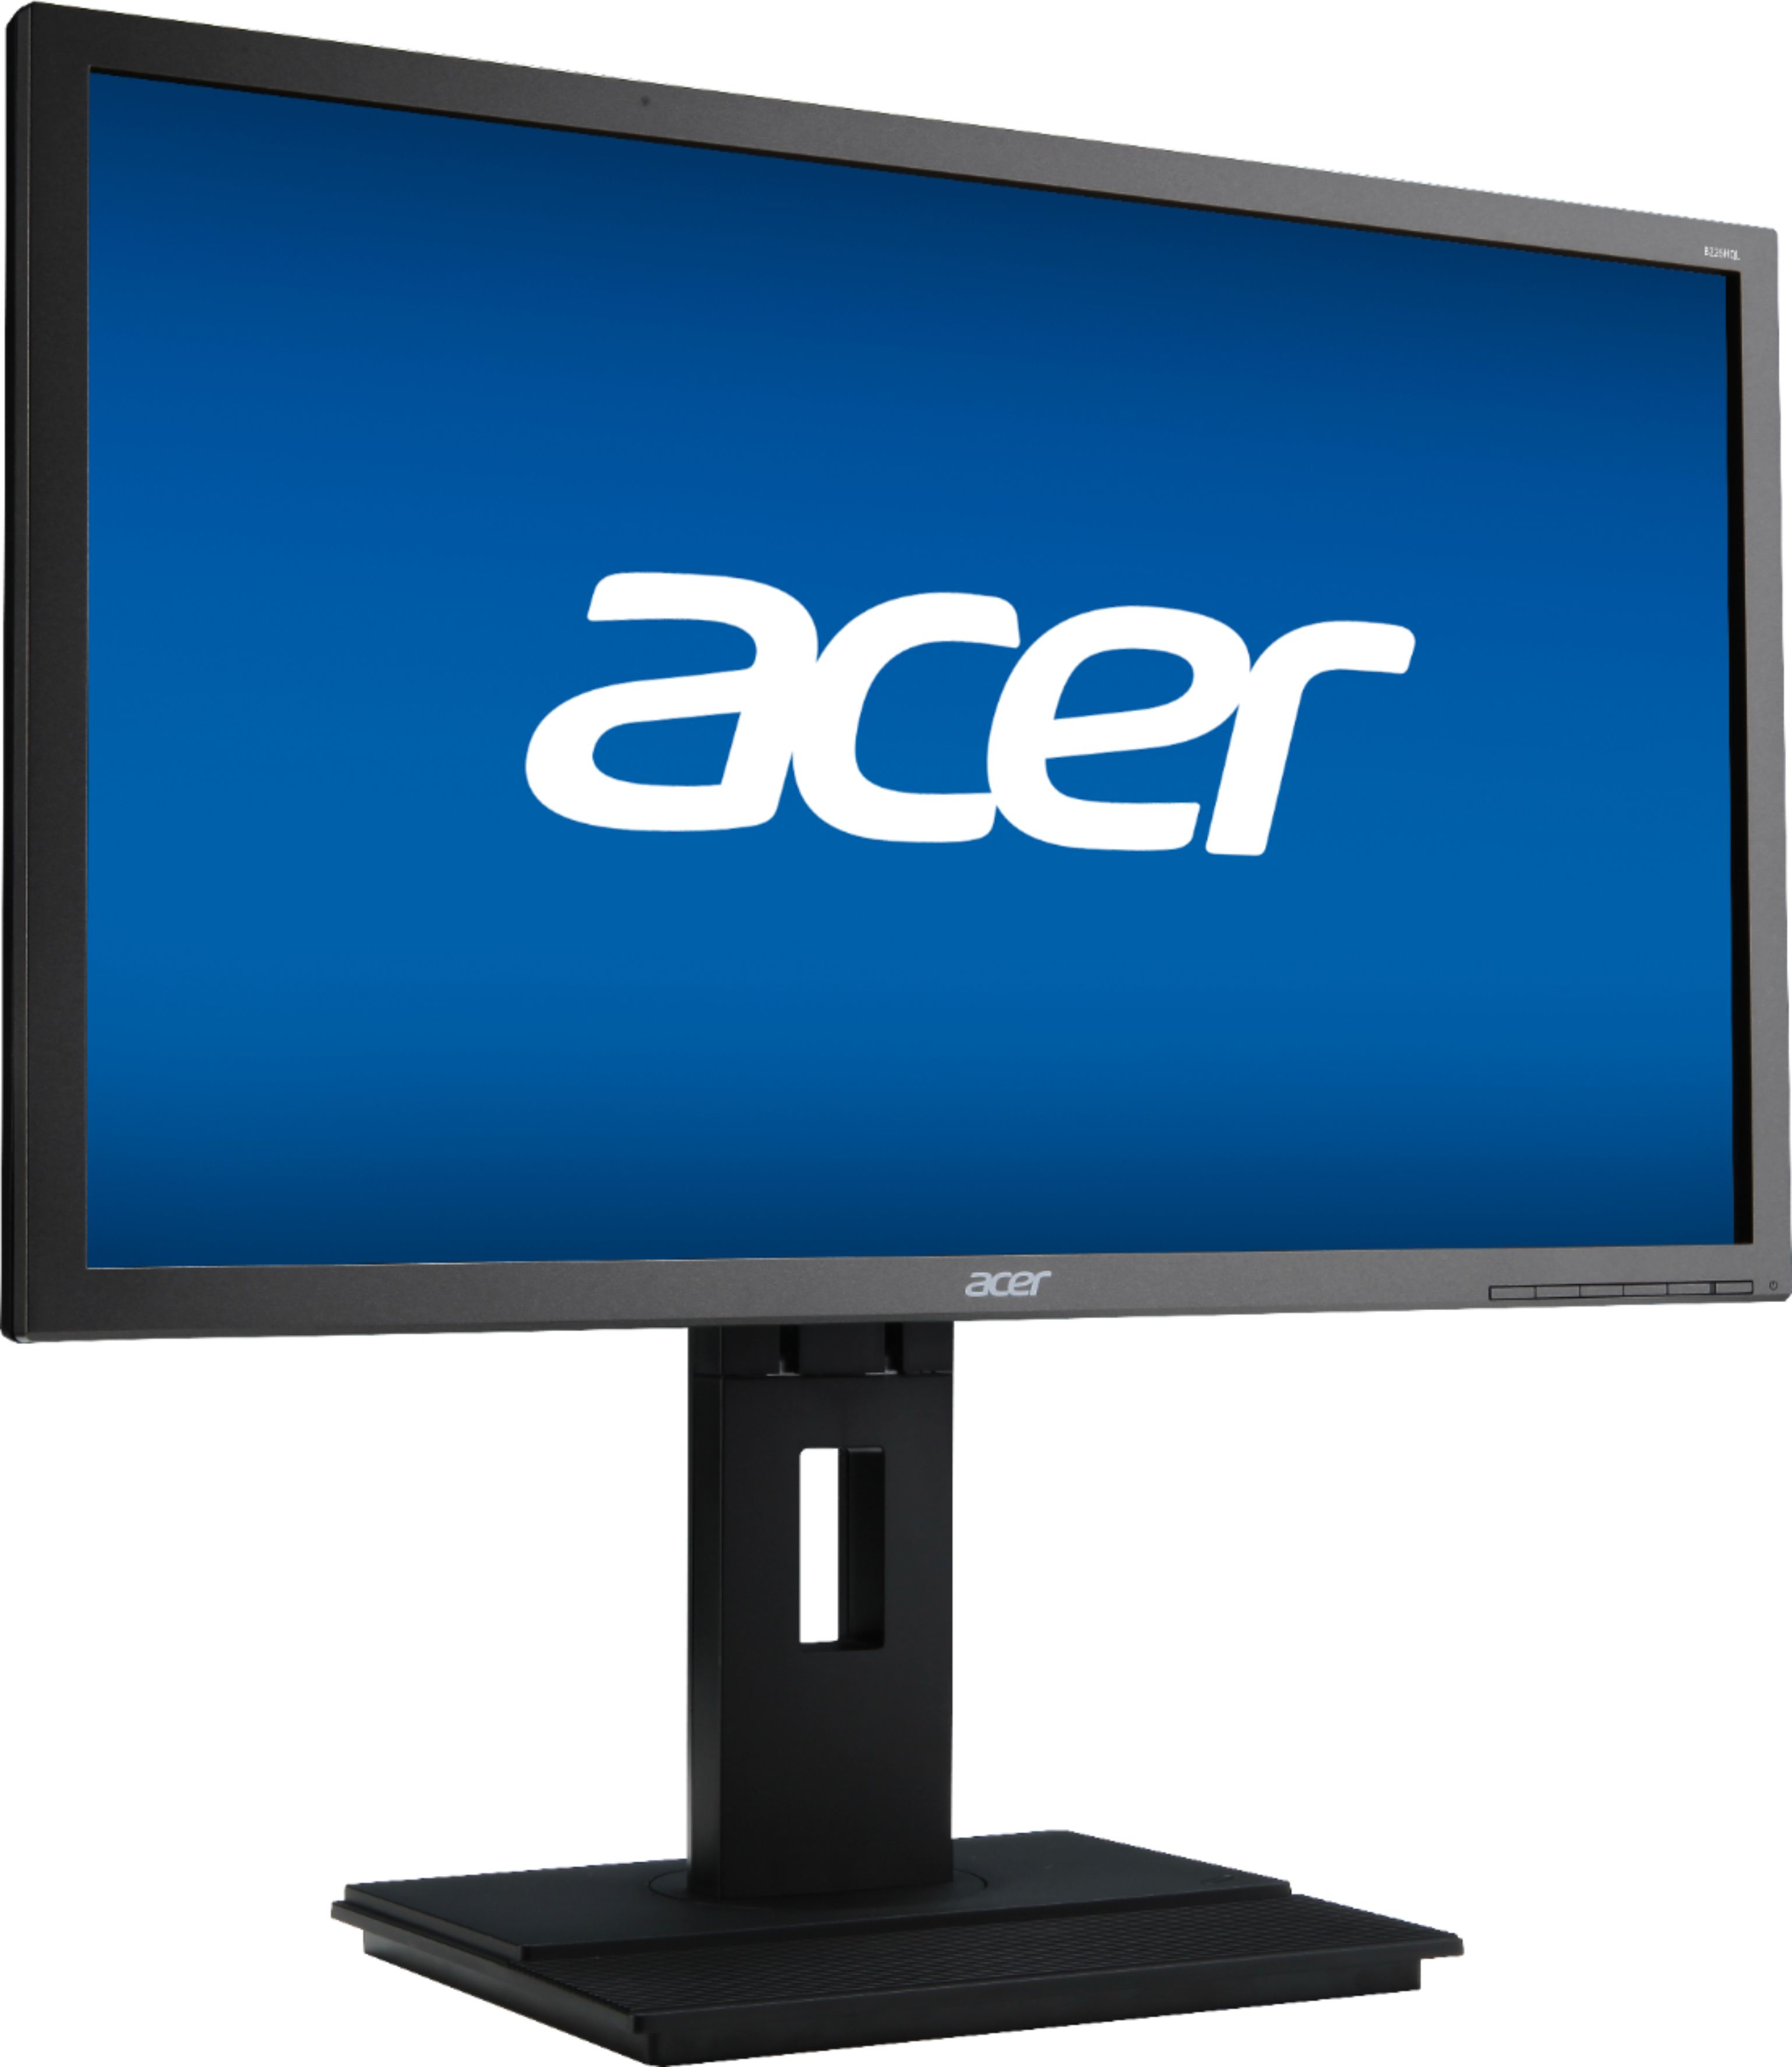 Angle View: Acer - 21.5" LED FHD Monitor (DVI, DisplayPort, VGA) - Dark Gray